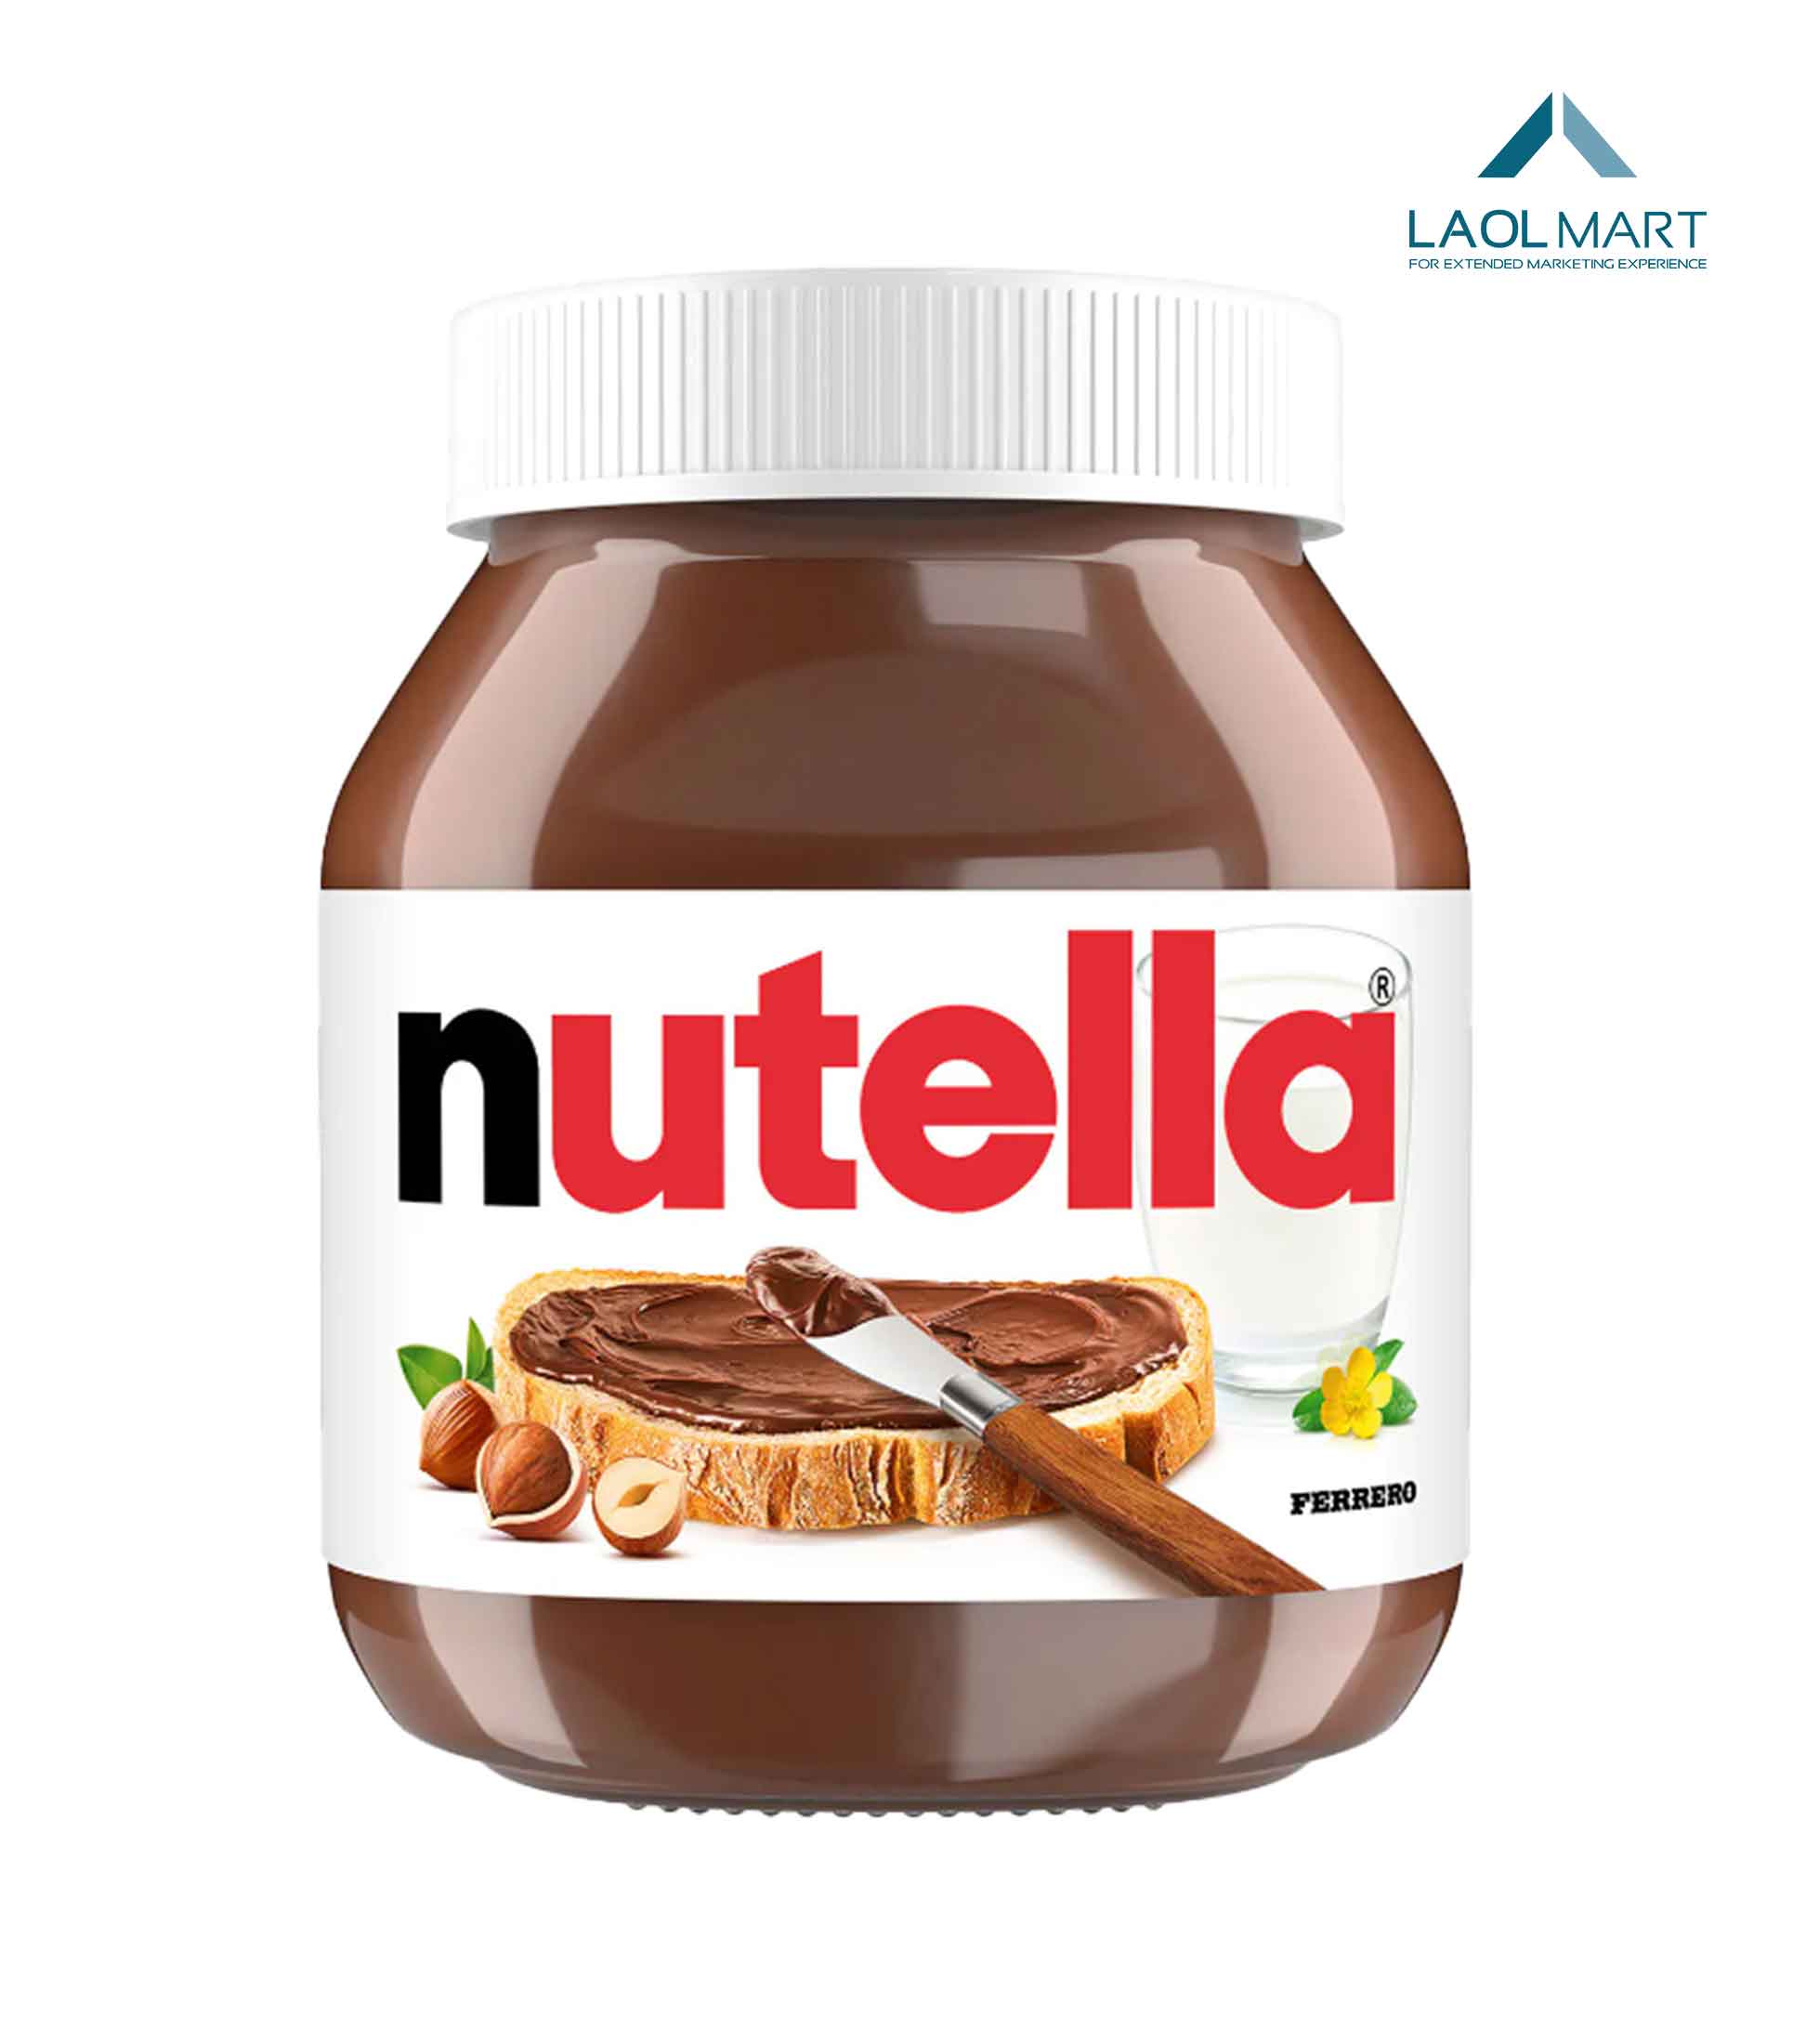 Nutella 750g - Hazelnut Spread with Cocoa